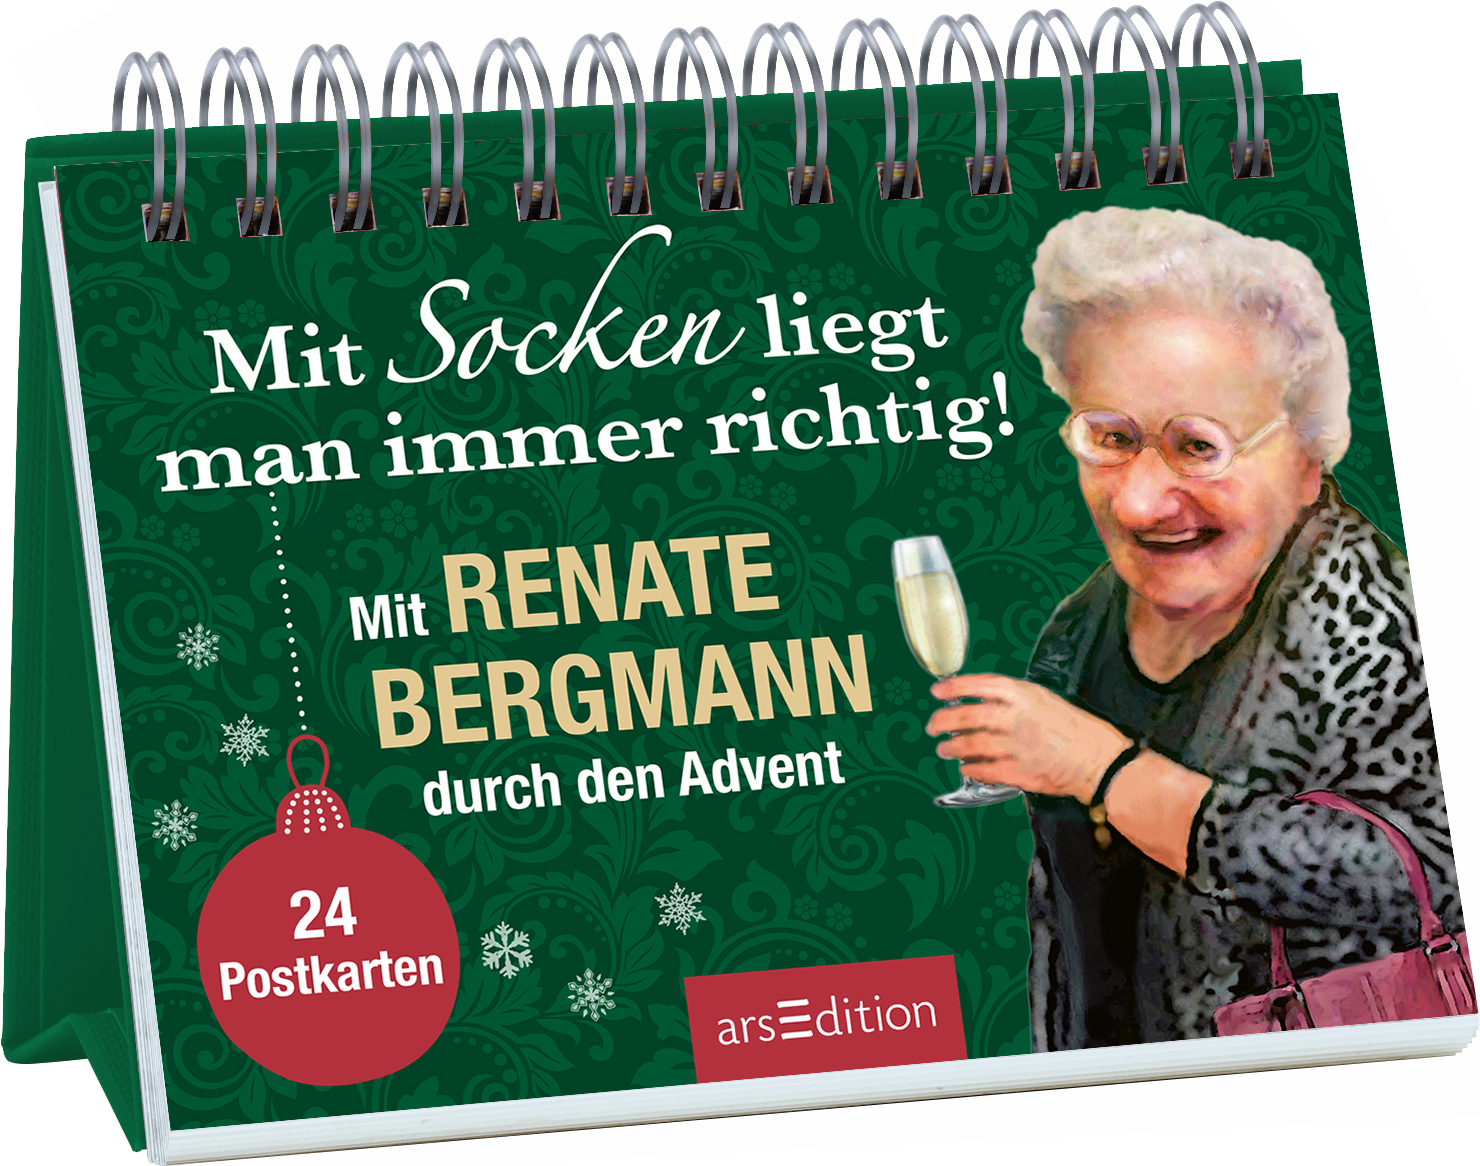 ARS EDITION Adventskalender 17x14.5cm 35926513 Renate Bergmann Renate Bergmann